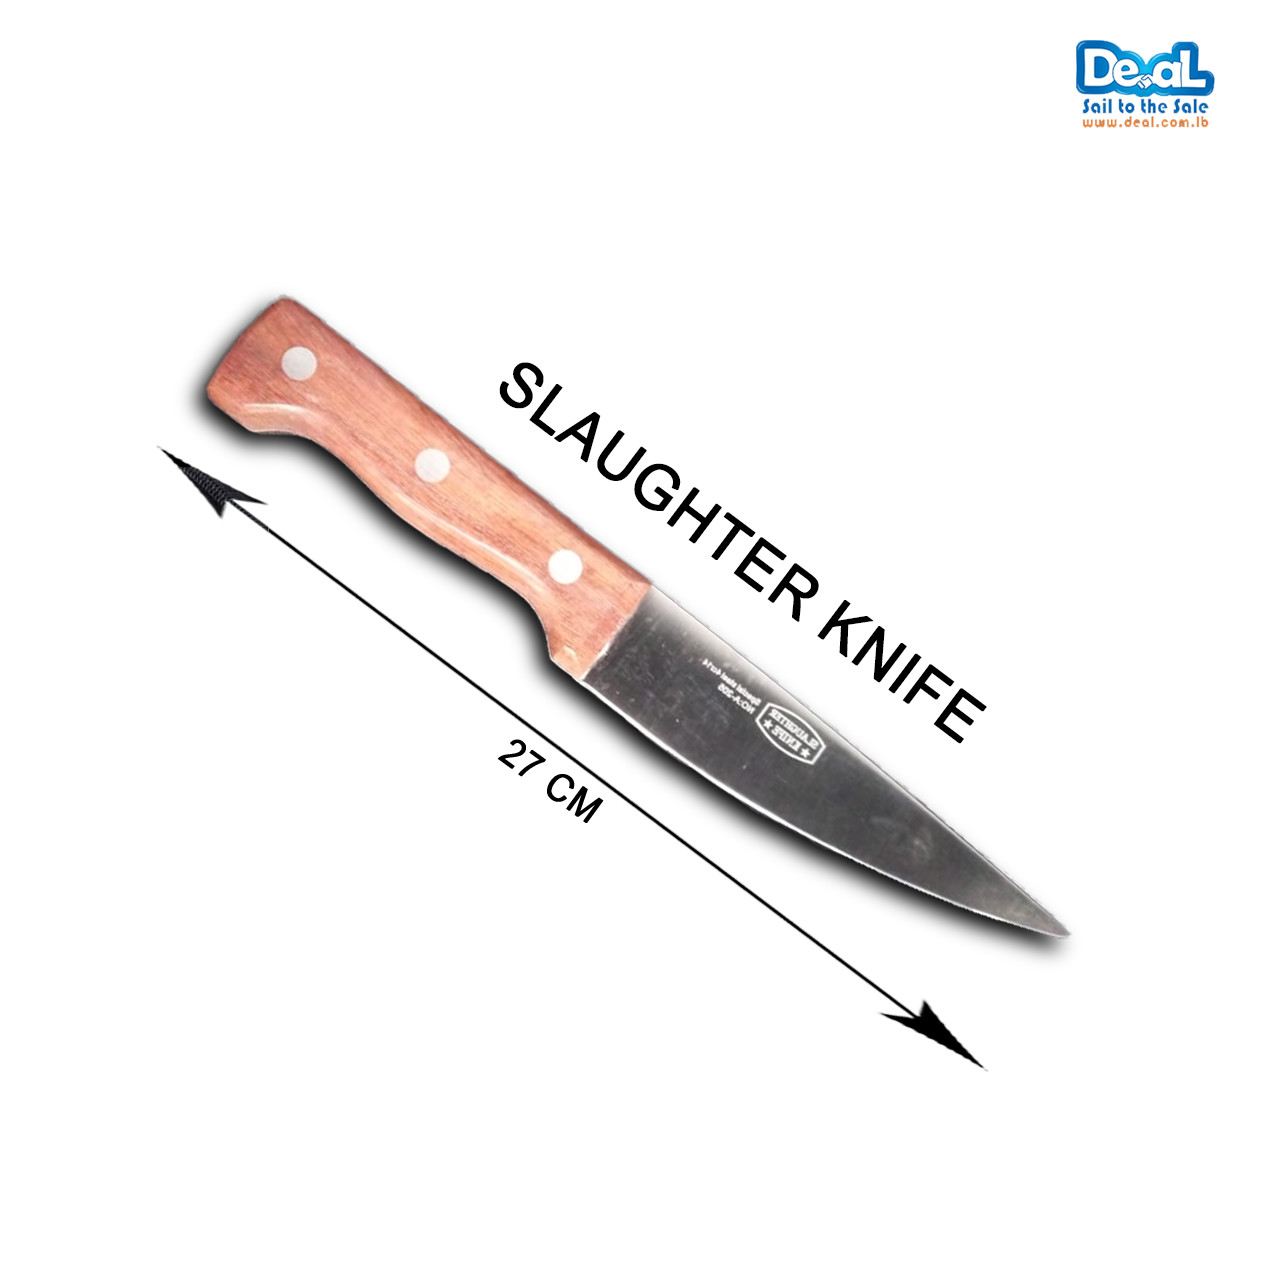 Slaughter knife Stainless Steel Slaughter 205 Butcher Decals Knife for Cleaning Vegetables Sushi Fruit Knives